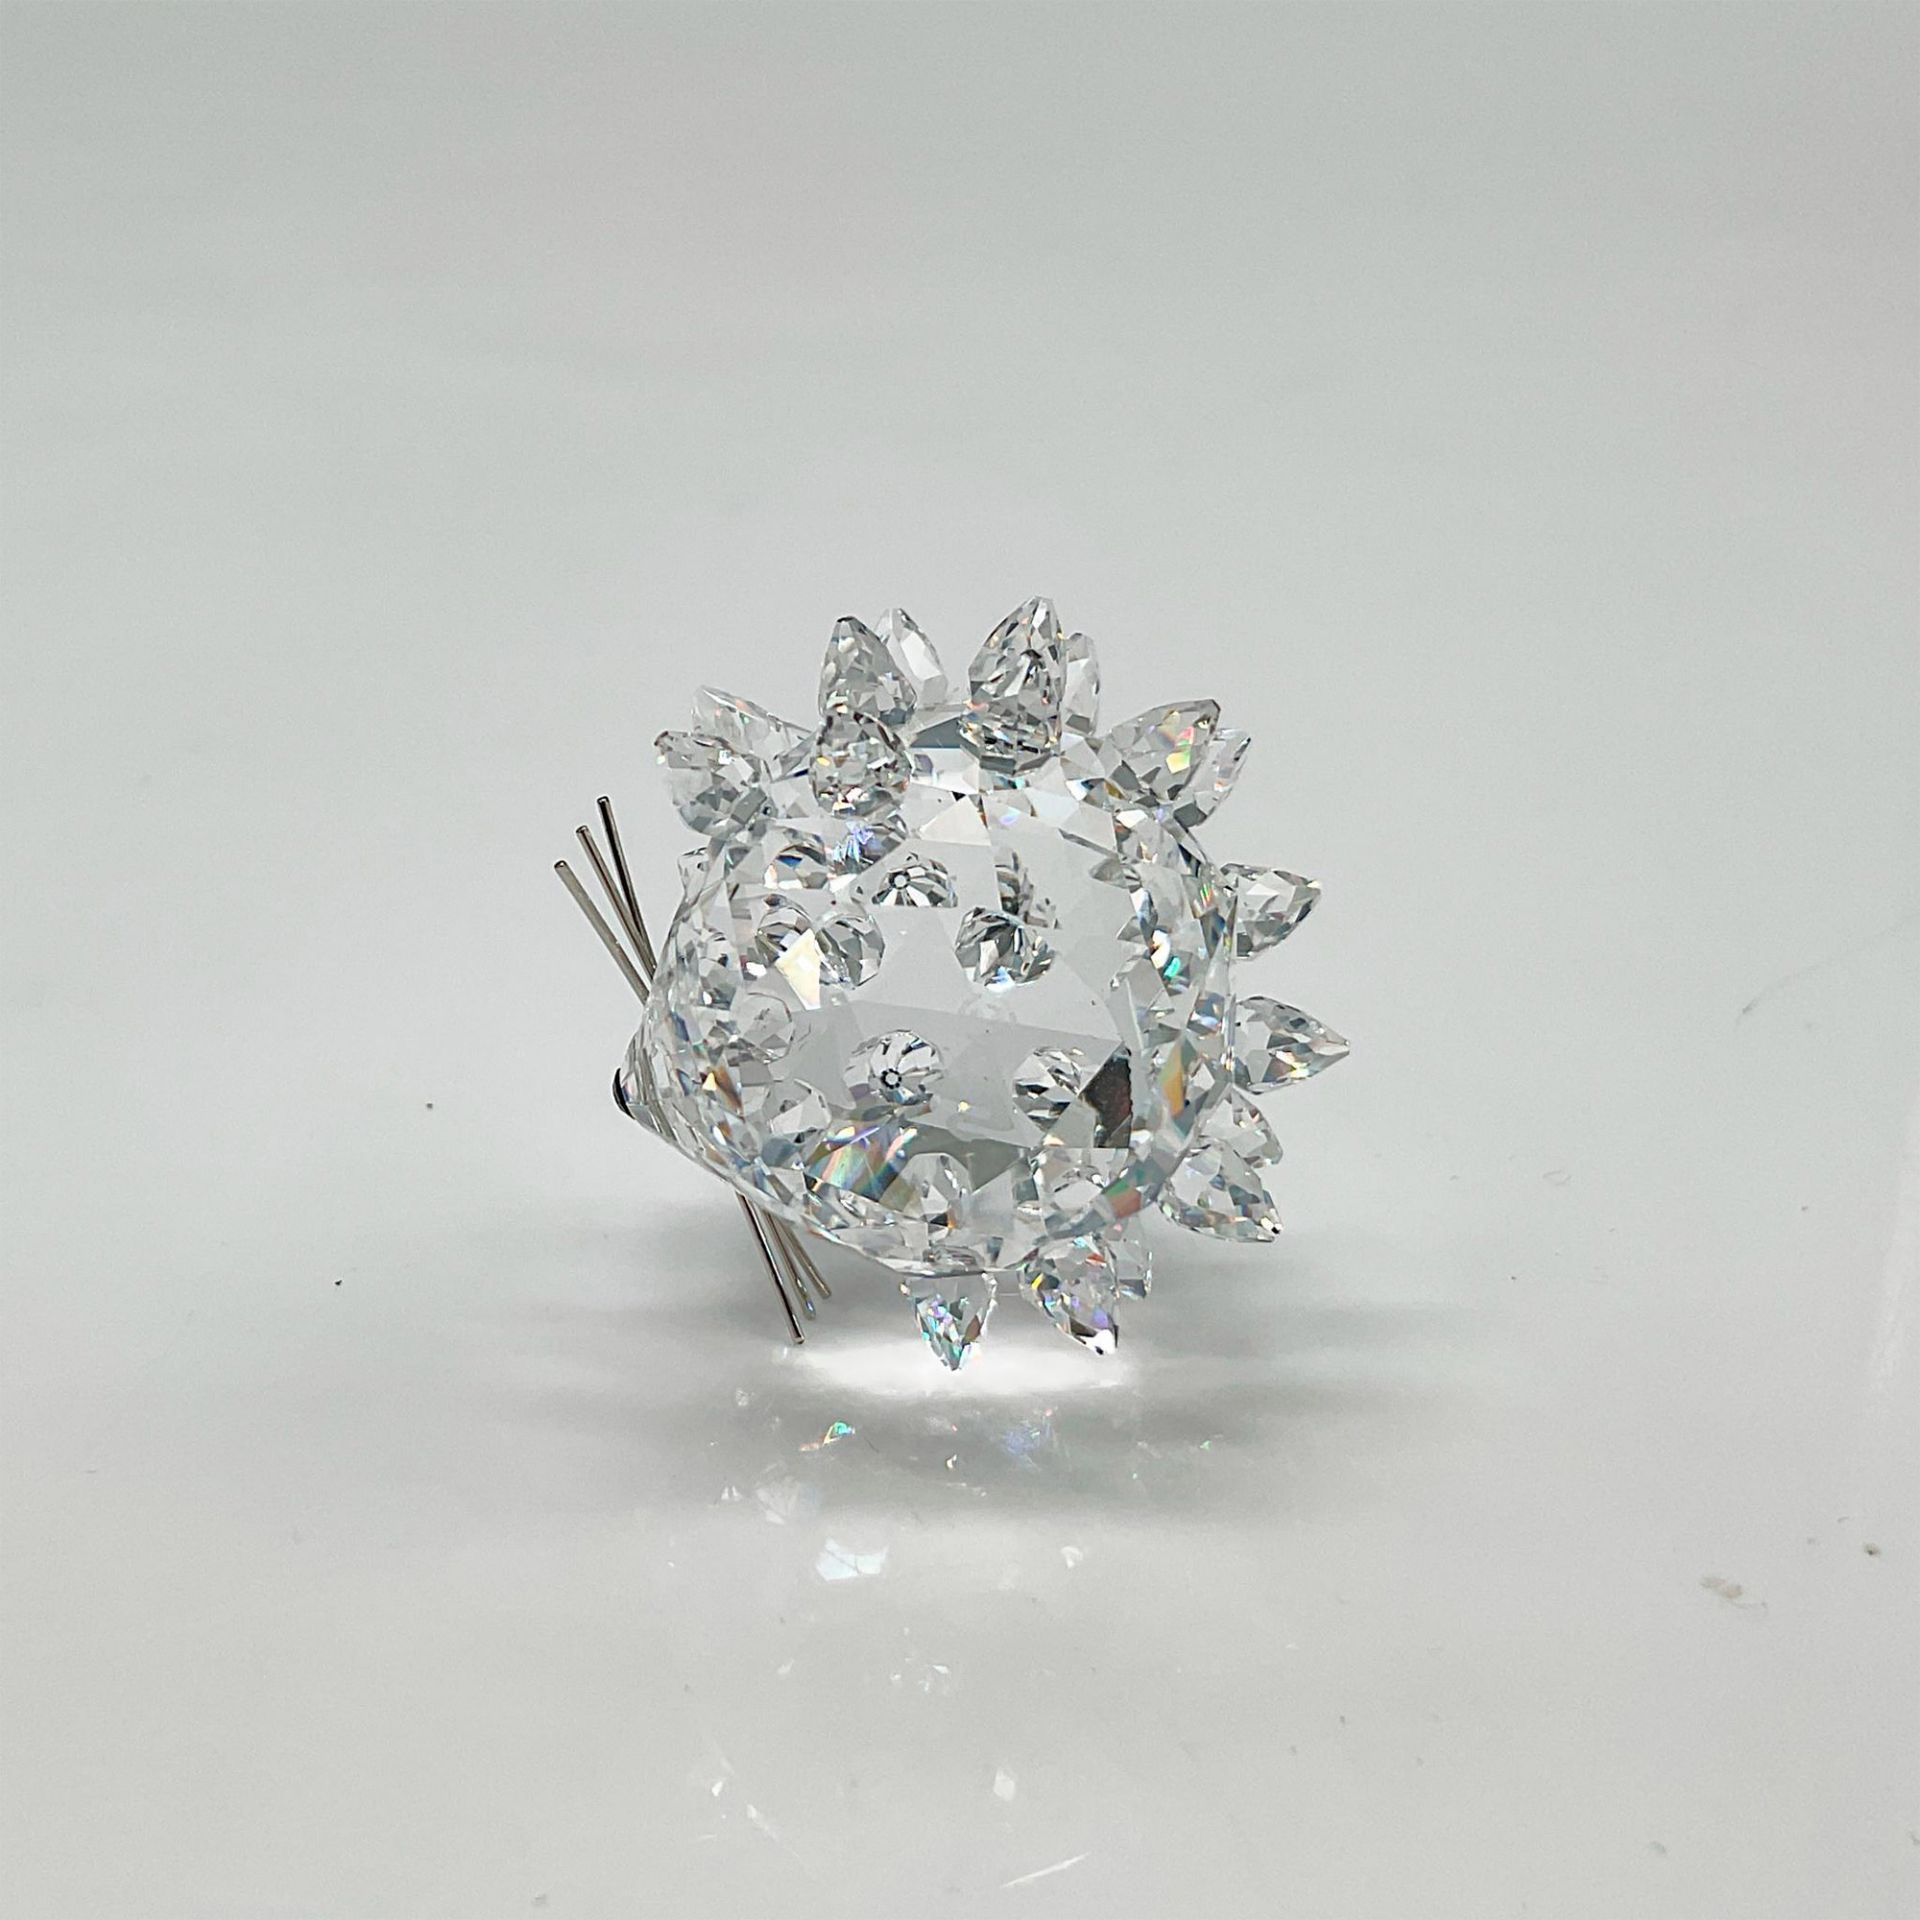 Swarovski Crystal Figurine, Small Hedgehog - Image 3 of 4